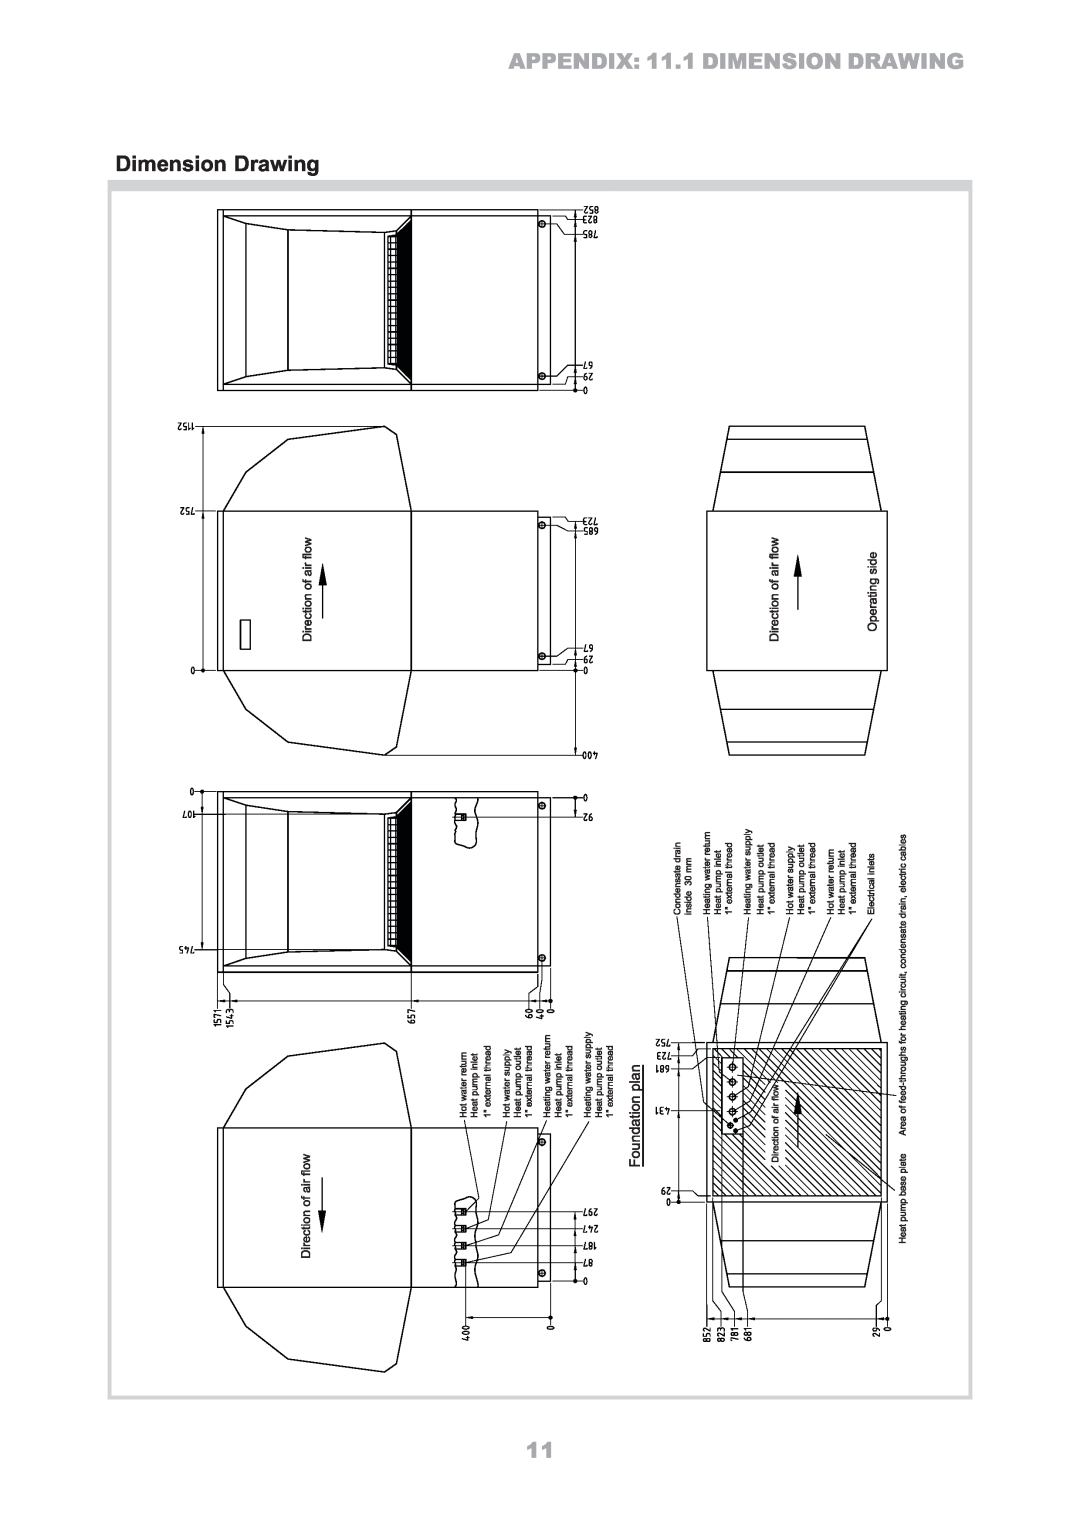 Dimplex LA16ASR manual Dimension Drawing, APPENDIX 11.1 DIMENSION DRAWING 